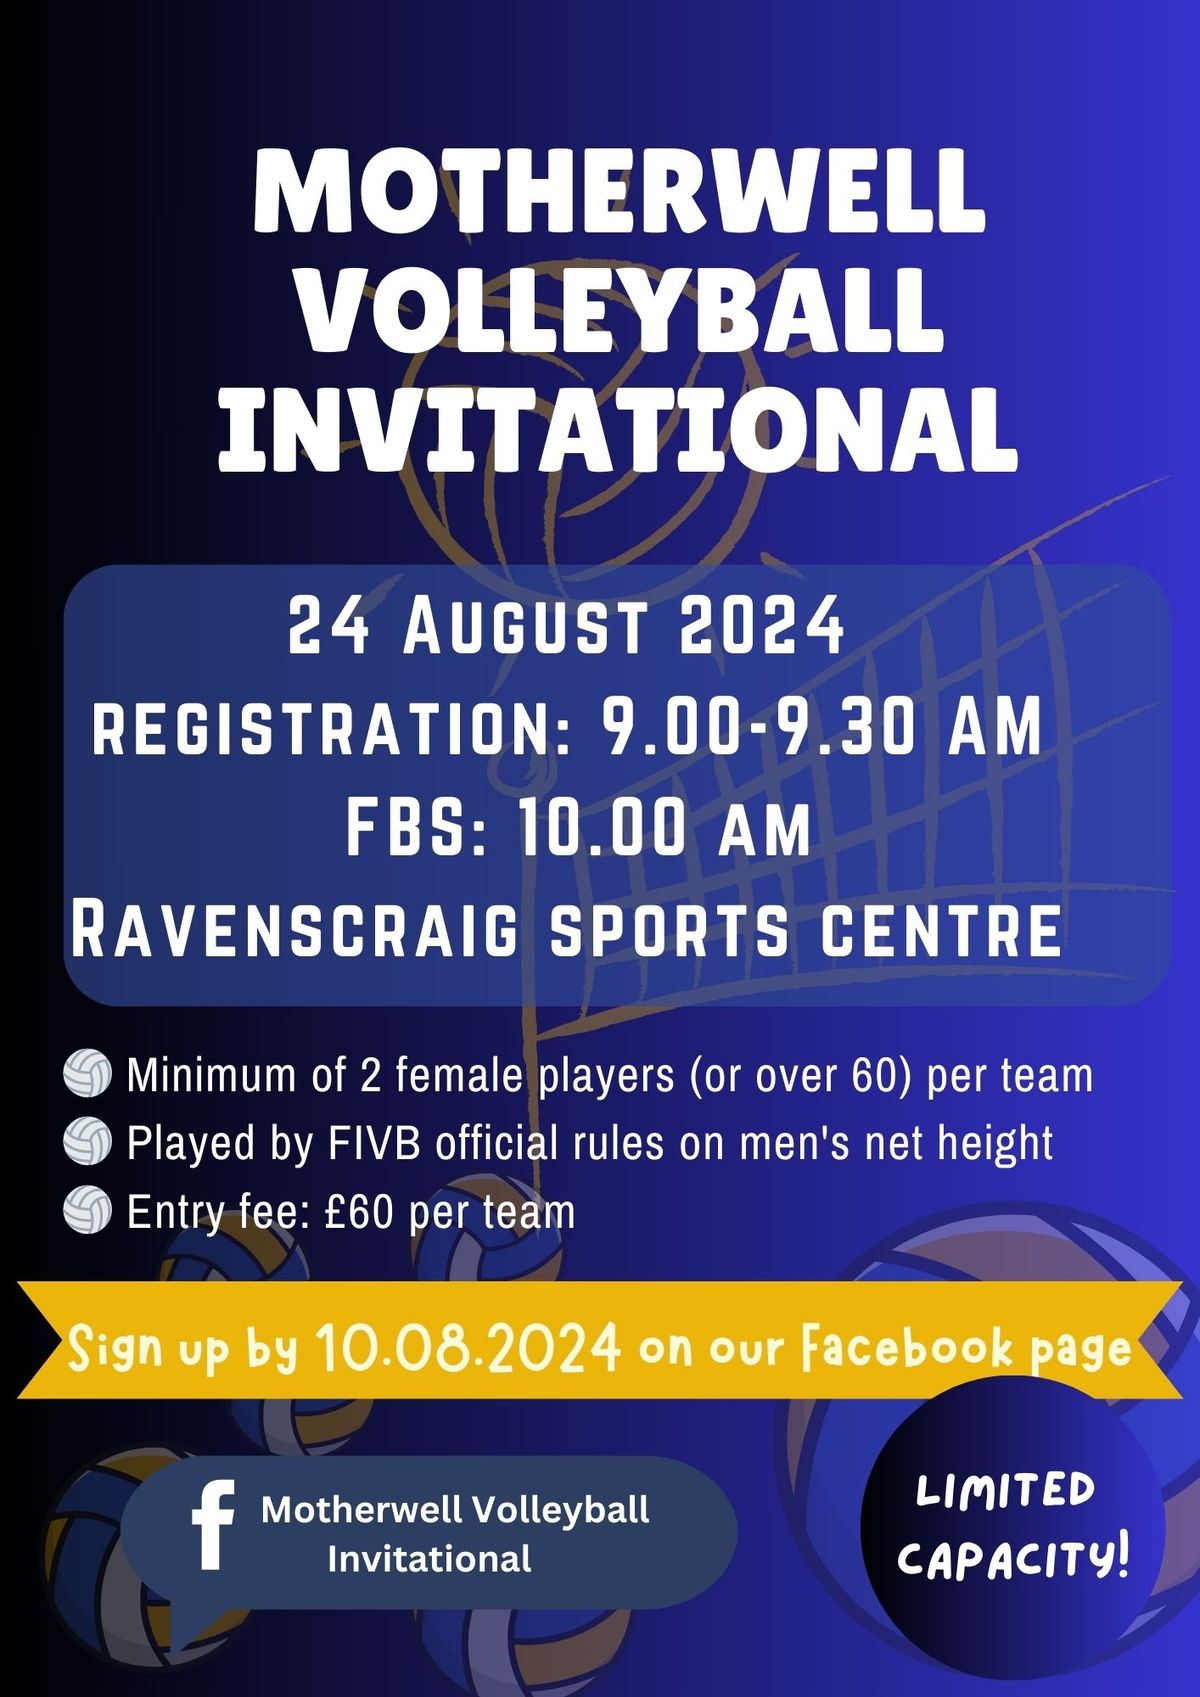 Motherwell Volleyball Invitational